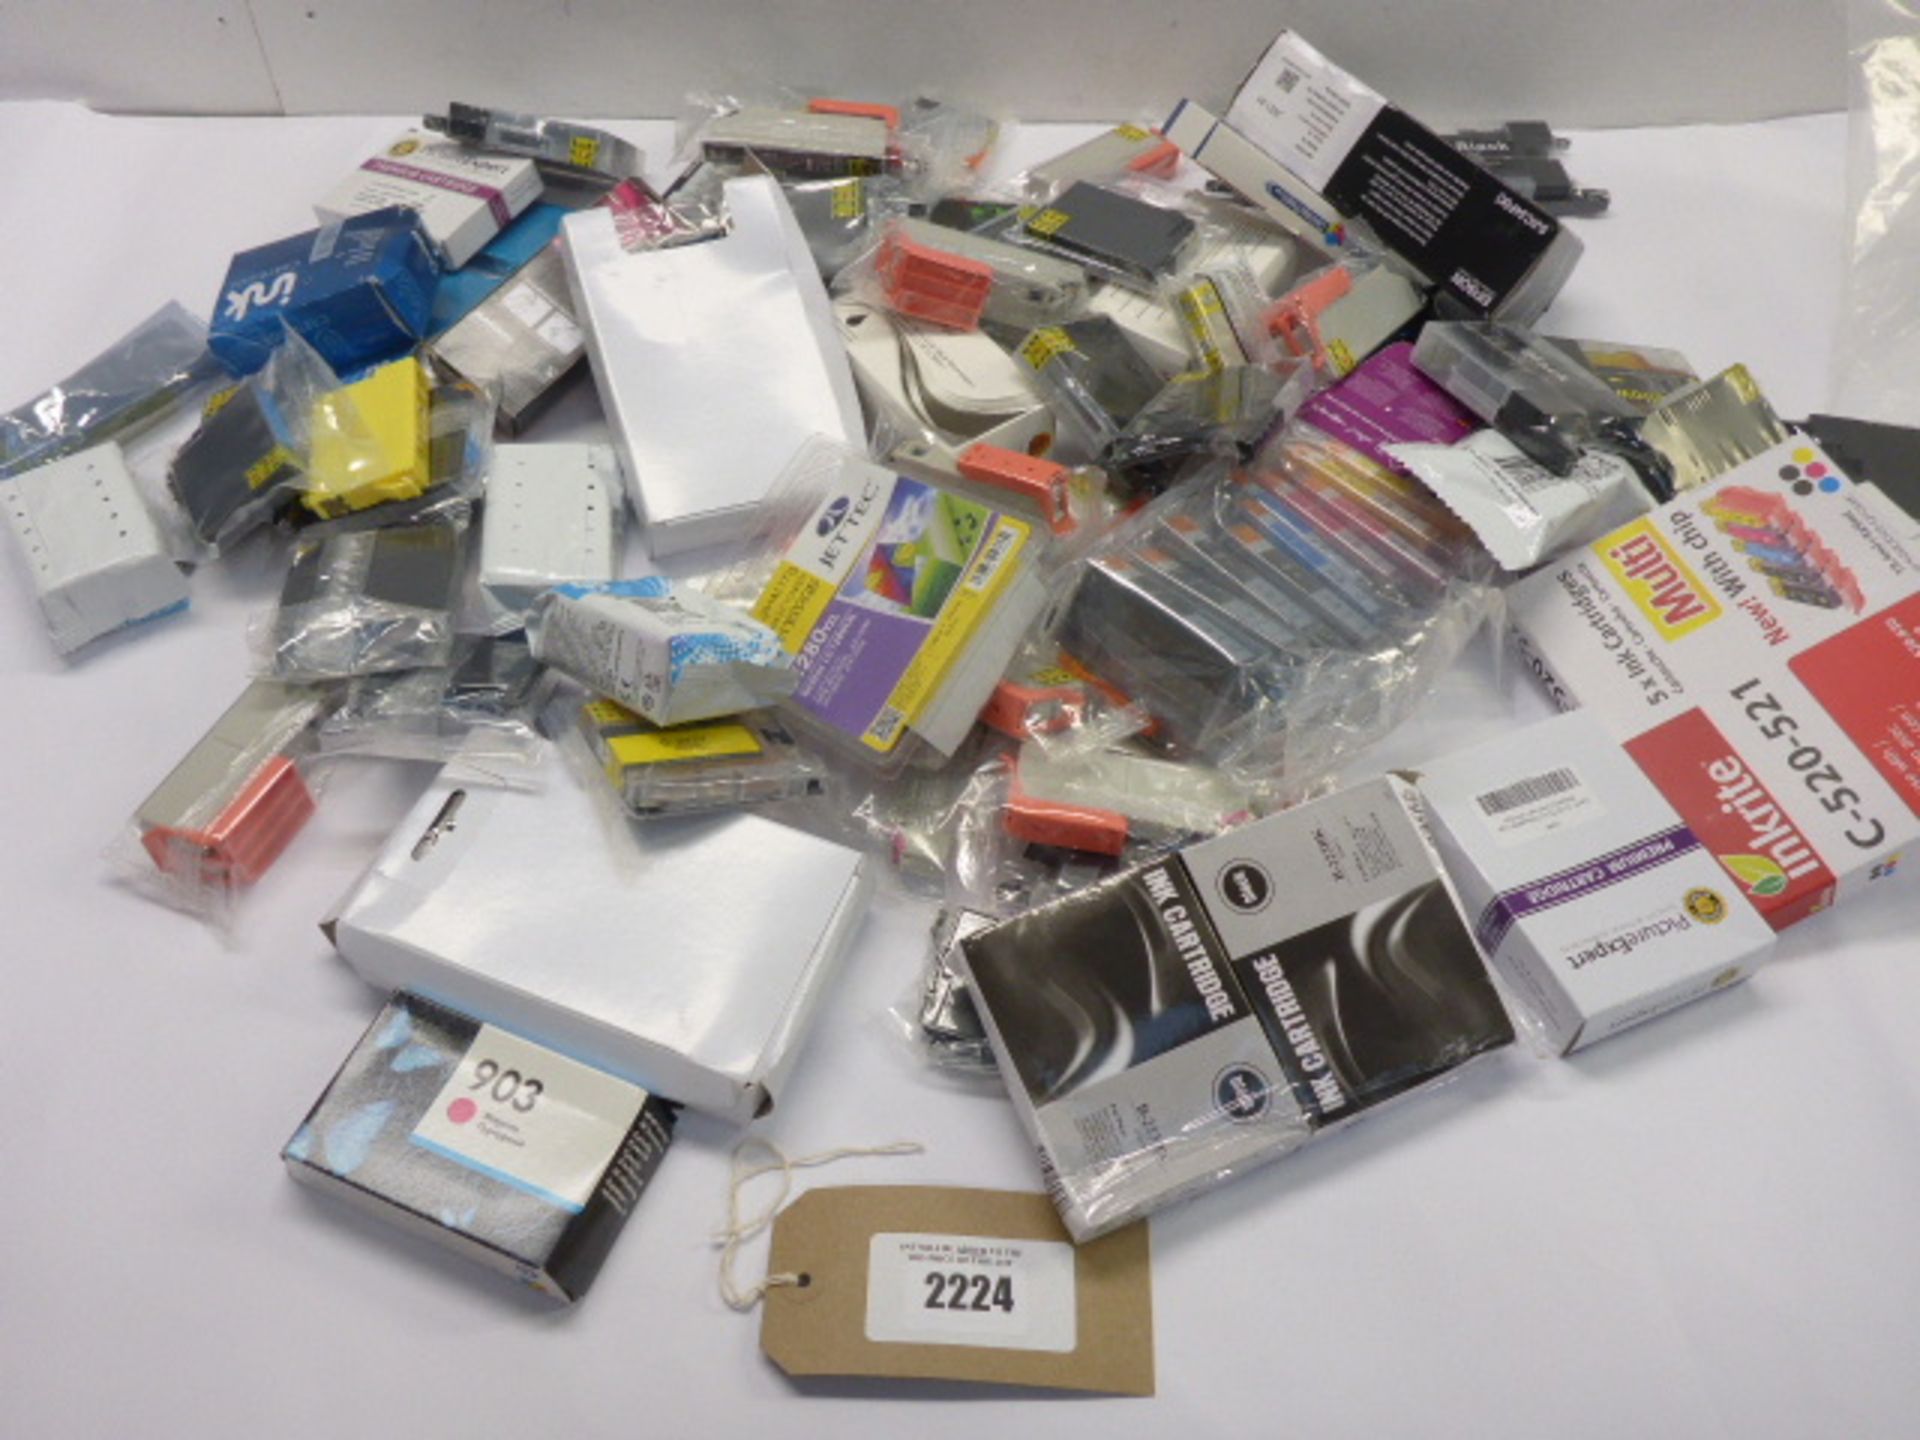 Bag containing quantity of various printer ink cartridges